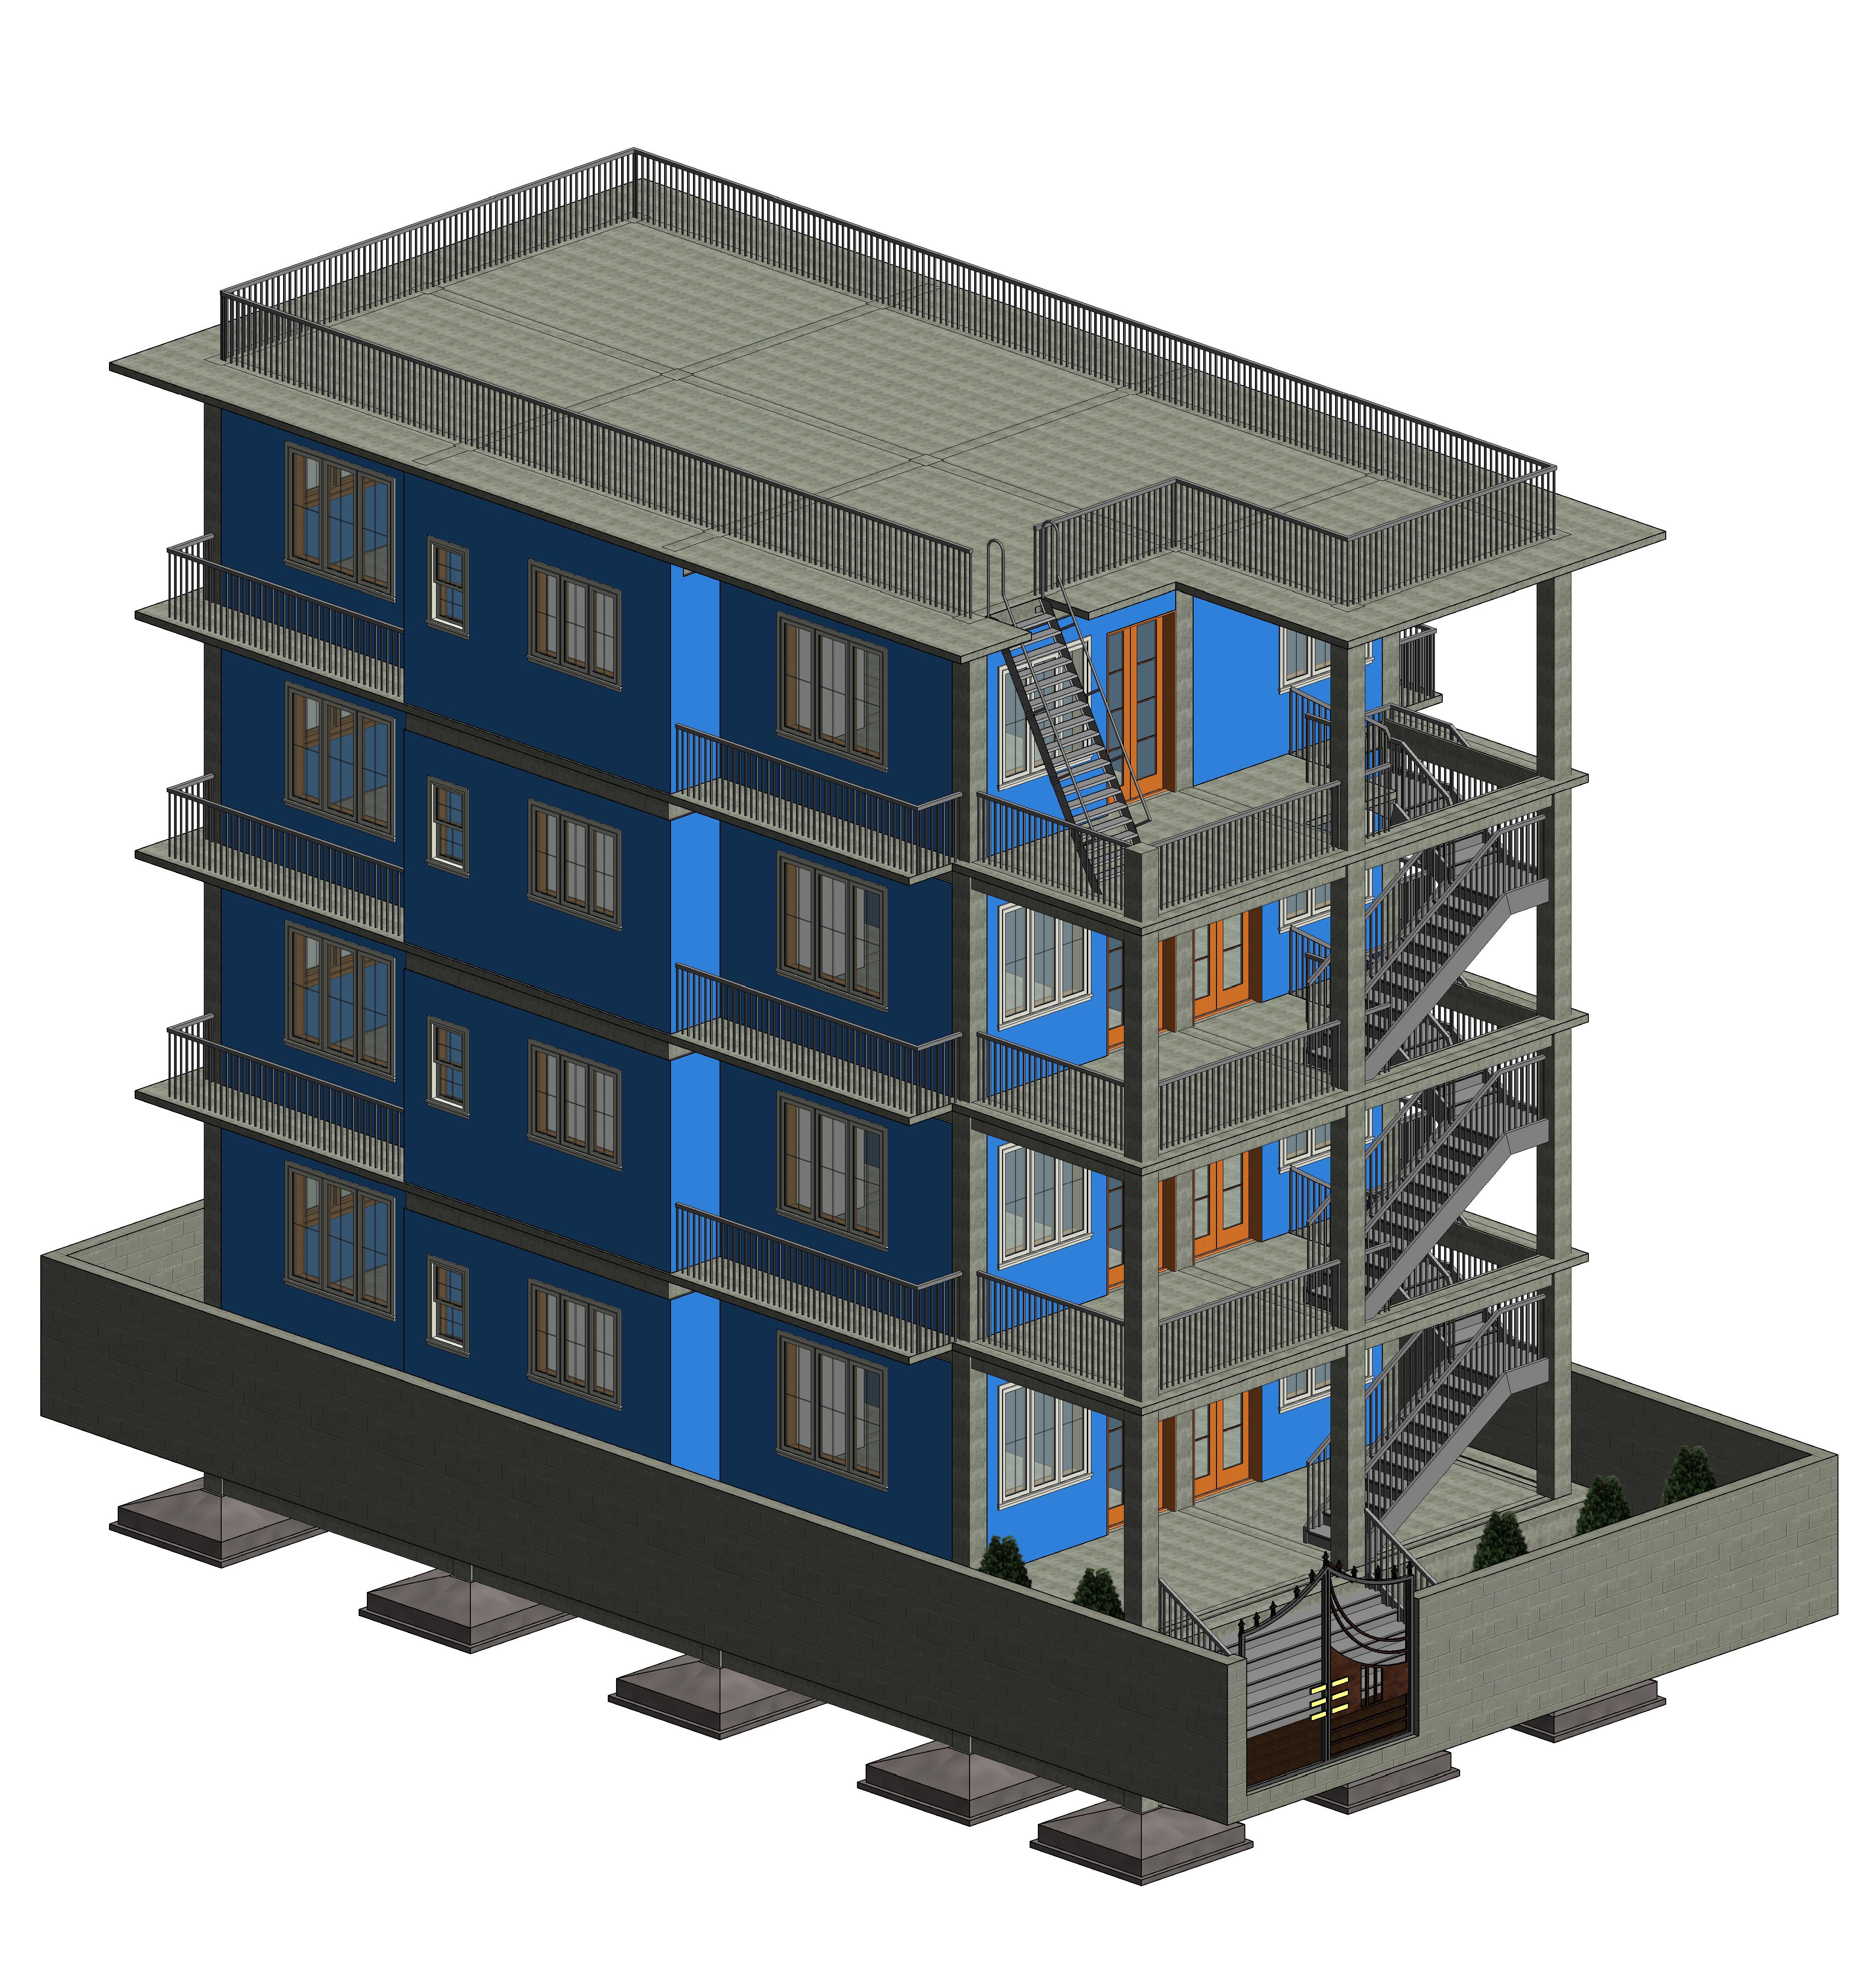 4 Storey Residential Building Design